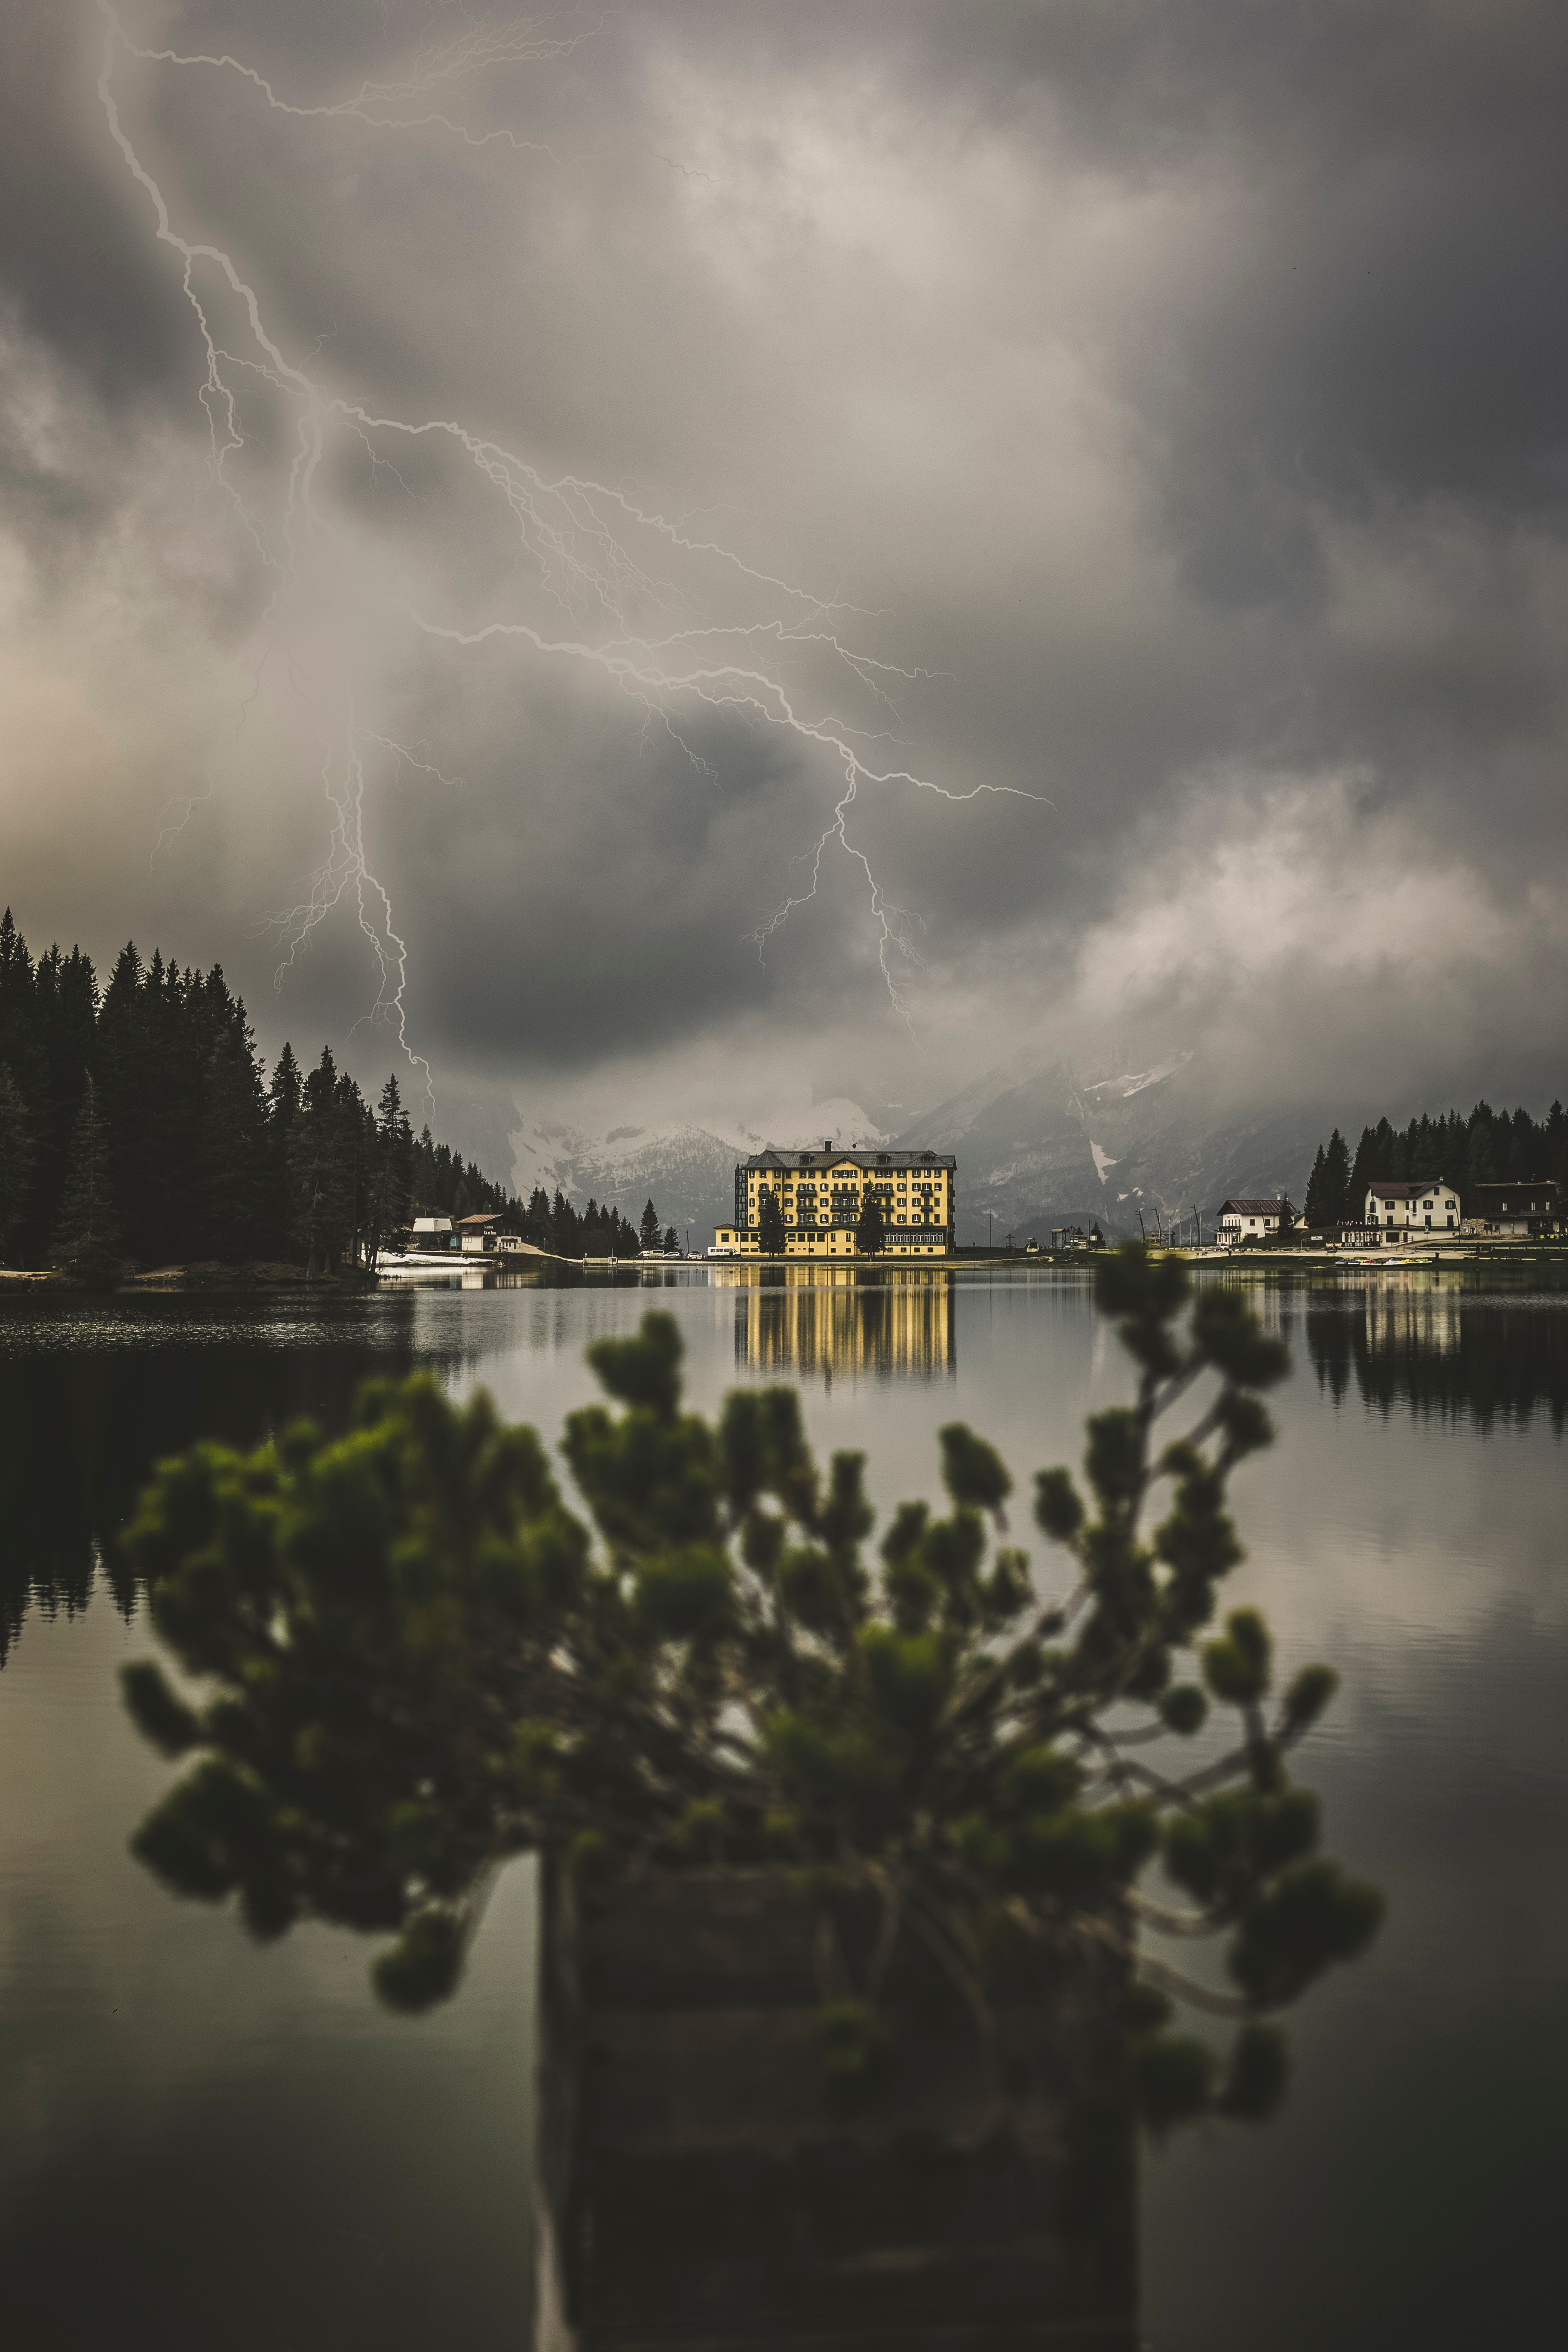 thunderstorm, lightning, nature, mountains, building, lake, storm